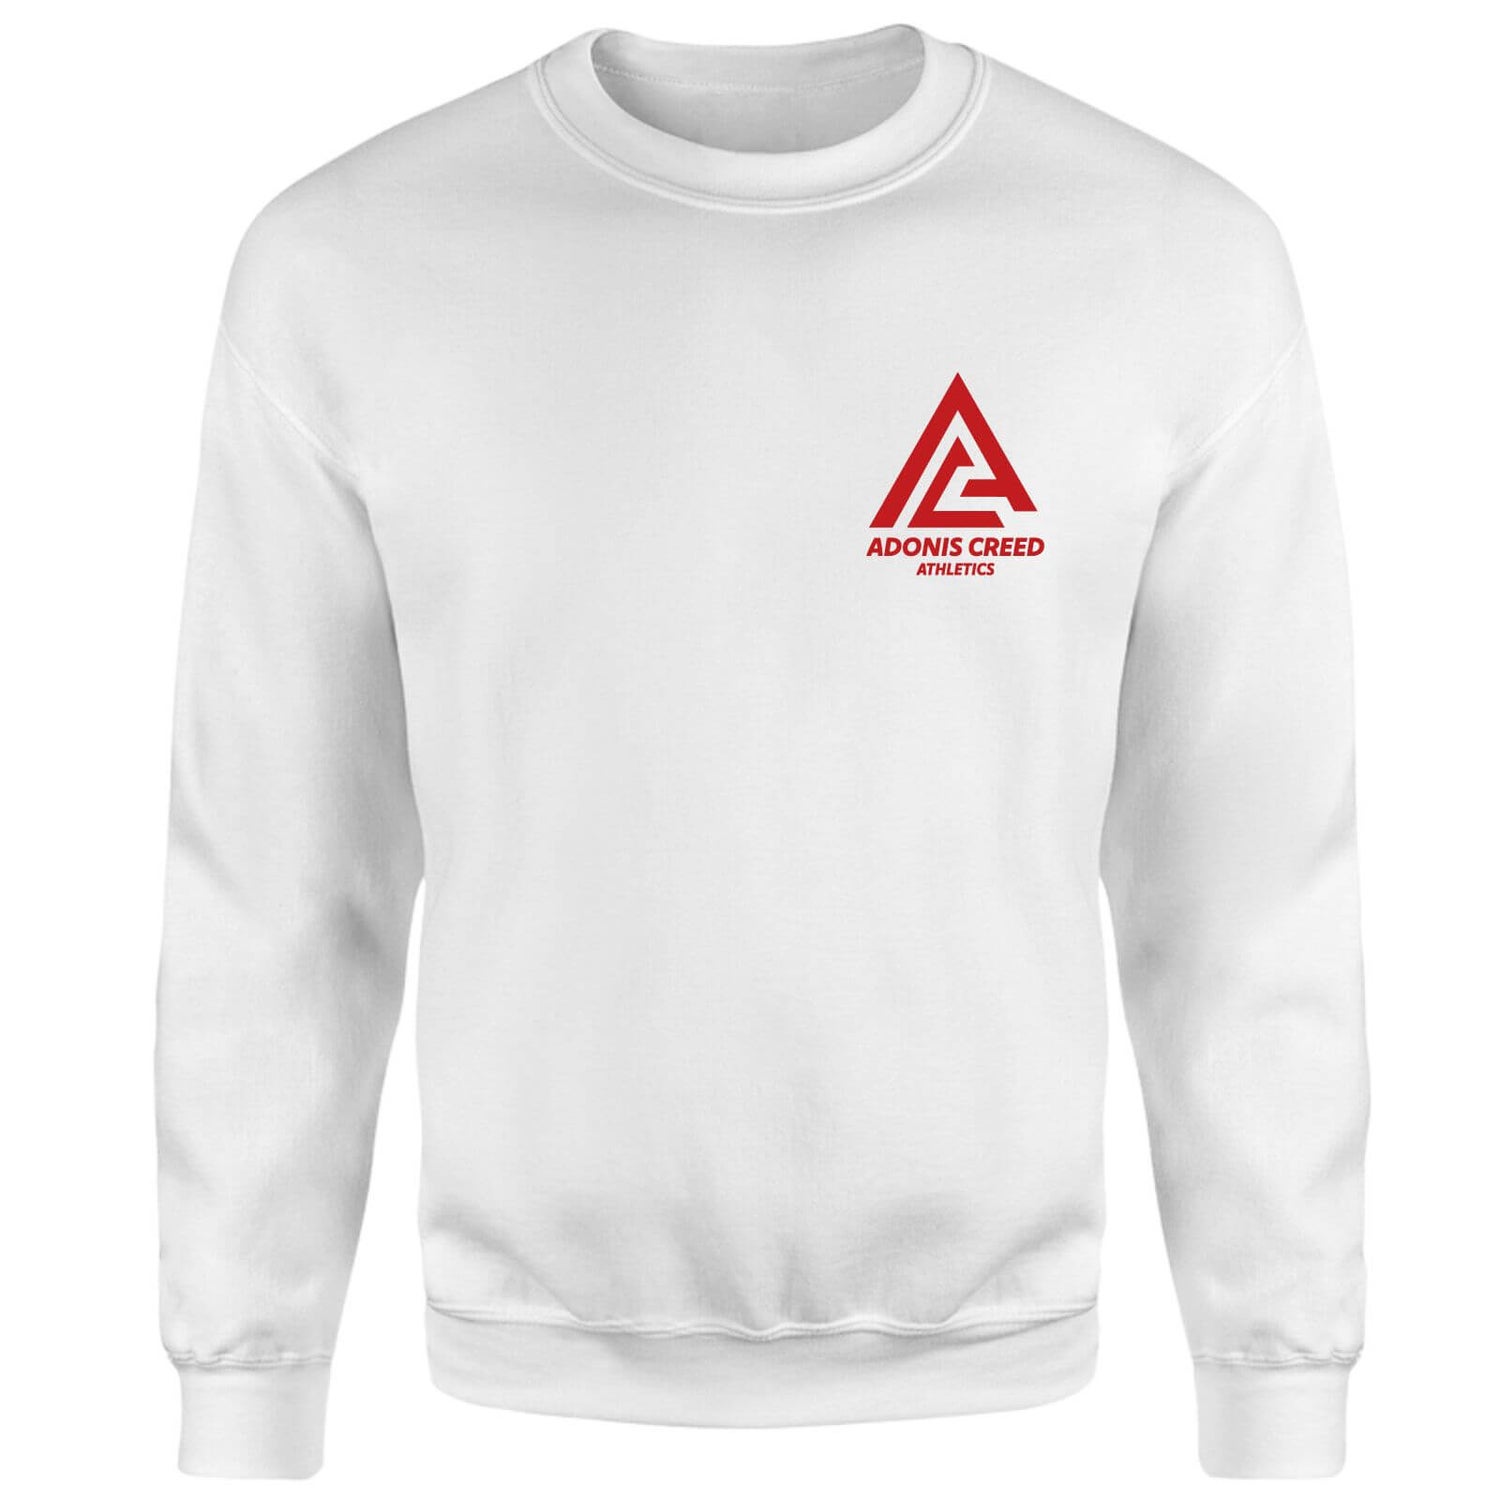 Creed Adonis Creed Athletics Logo Sweatshirt - White - XS